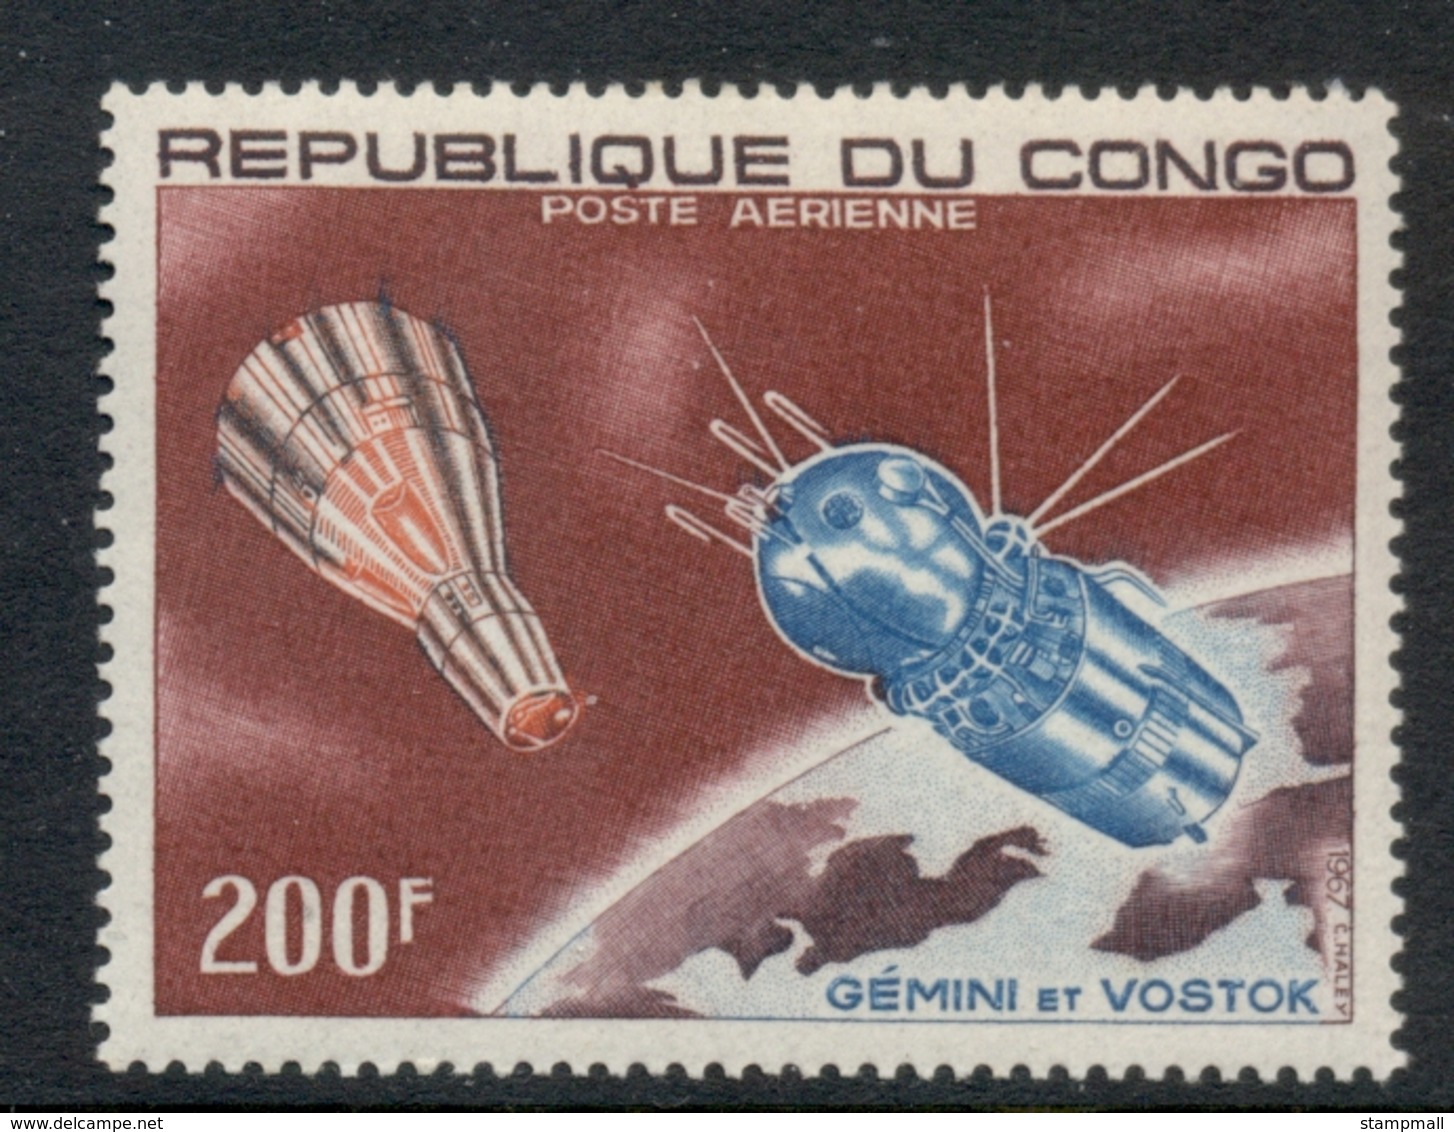 Congo 1967 Spacecraft Gemini & Vostok 200f MLH - Mint/hinged